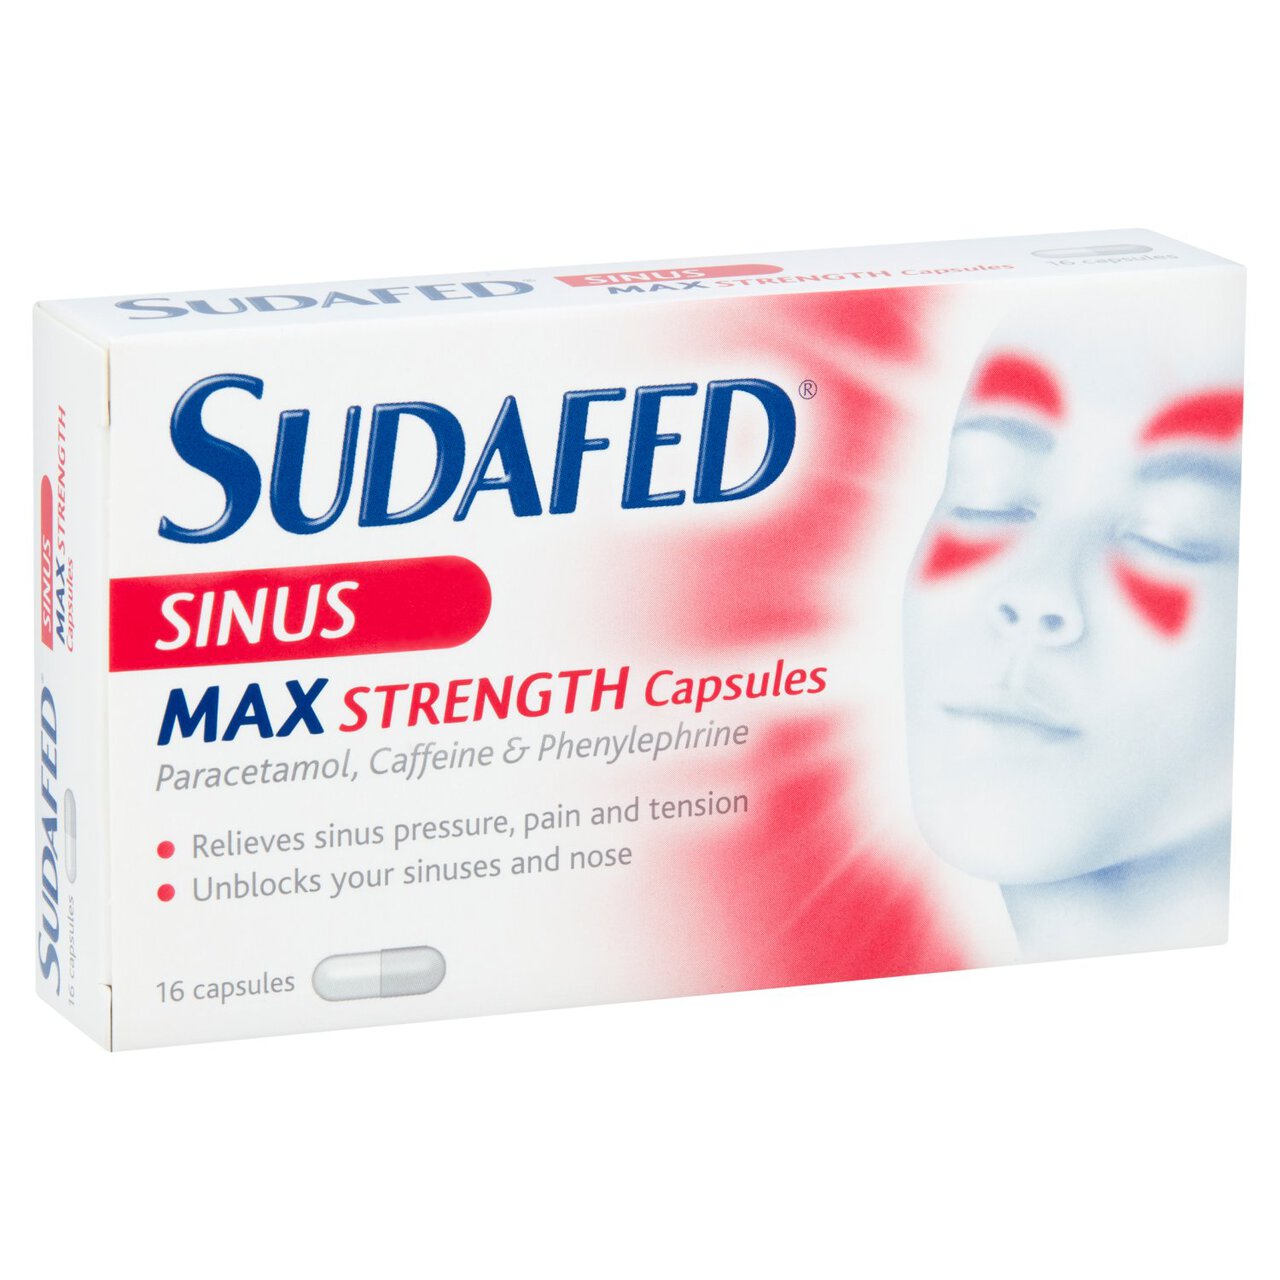 Sudafed Sinus Max Strength Capsules 16 per pack